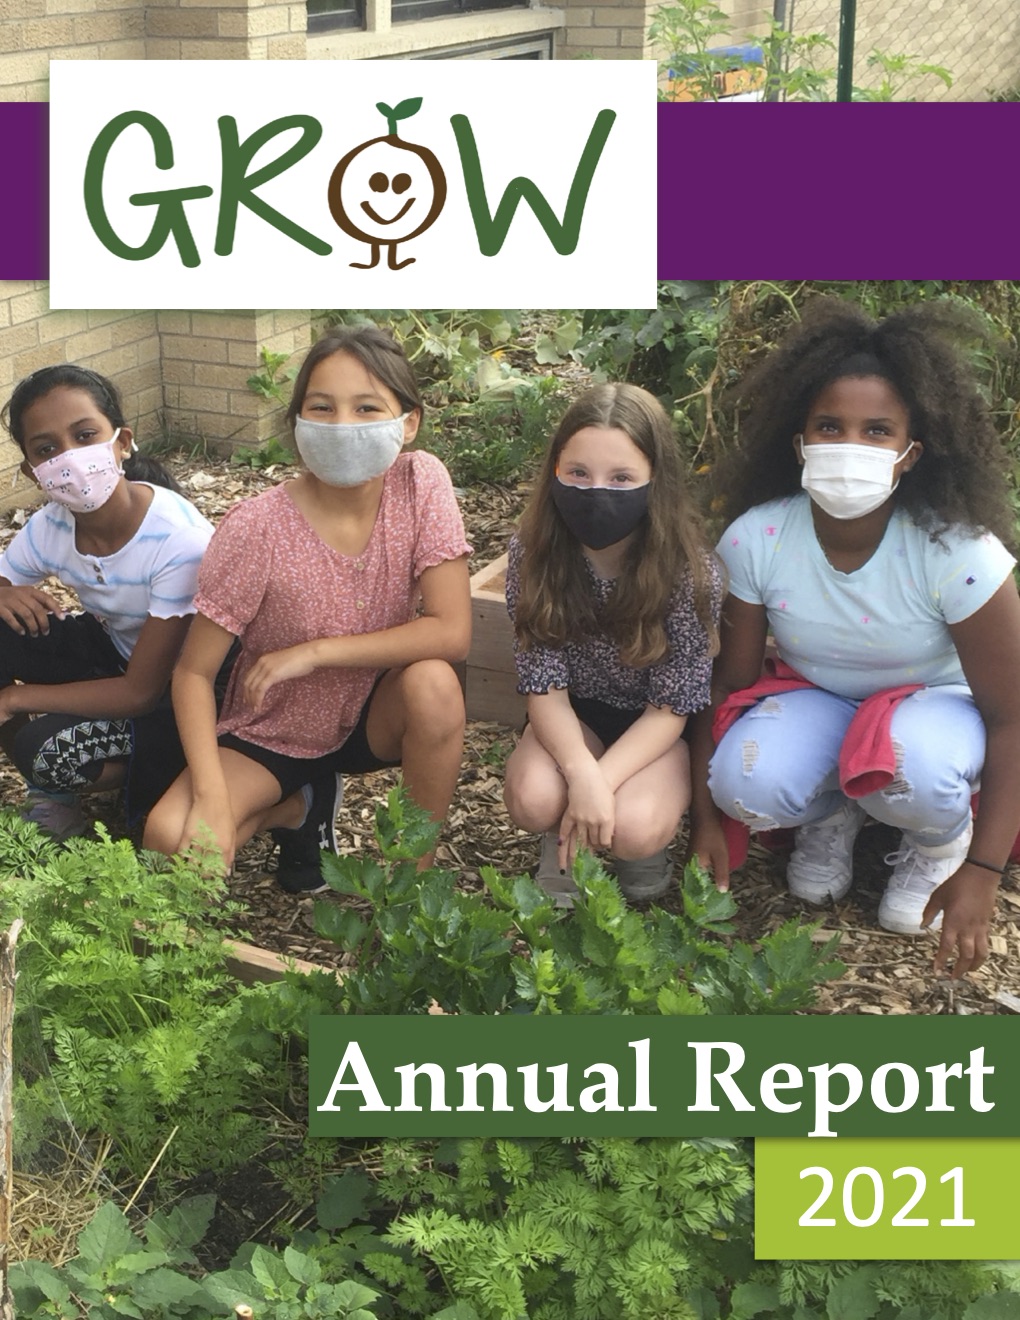 Annual Report 2021 pg. 1